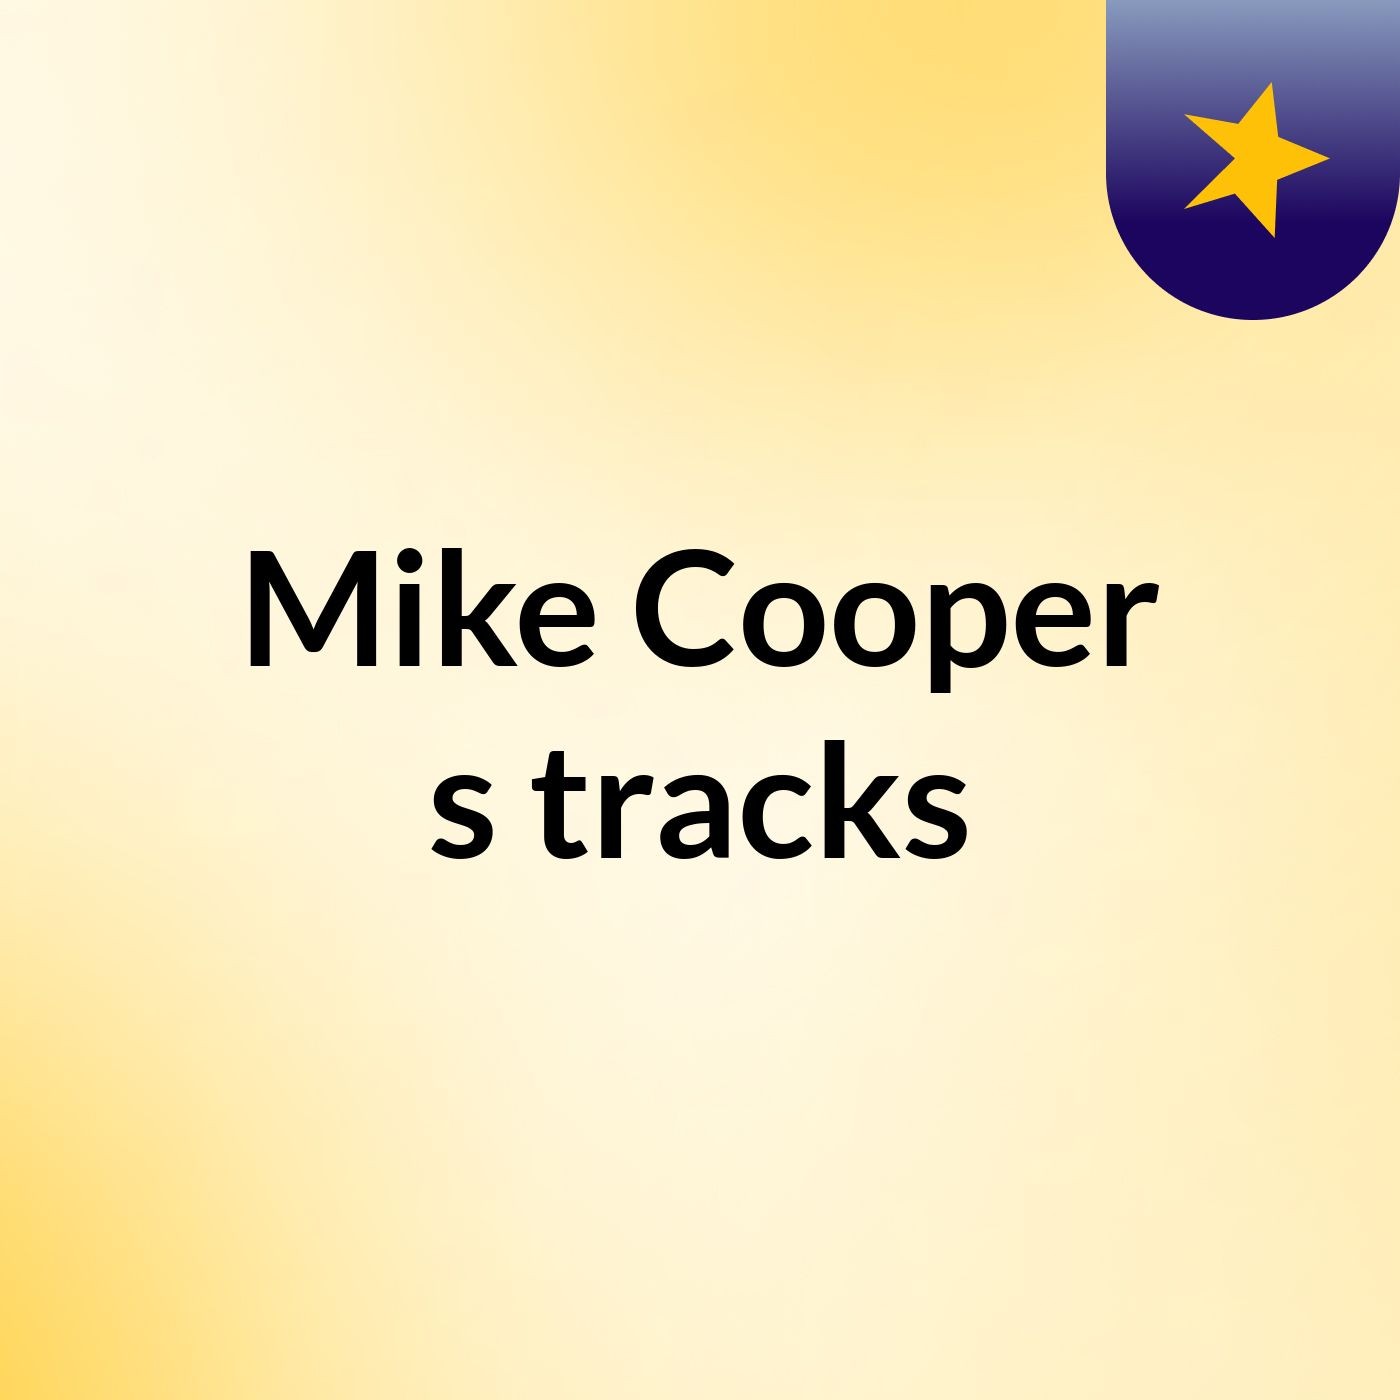 Mike Cooper's tracks